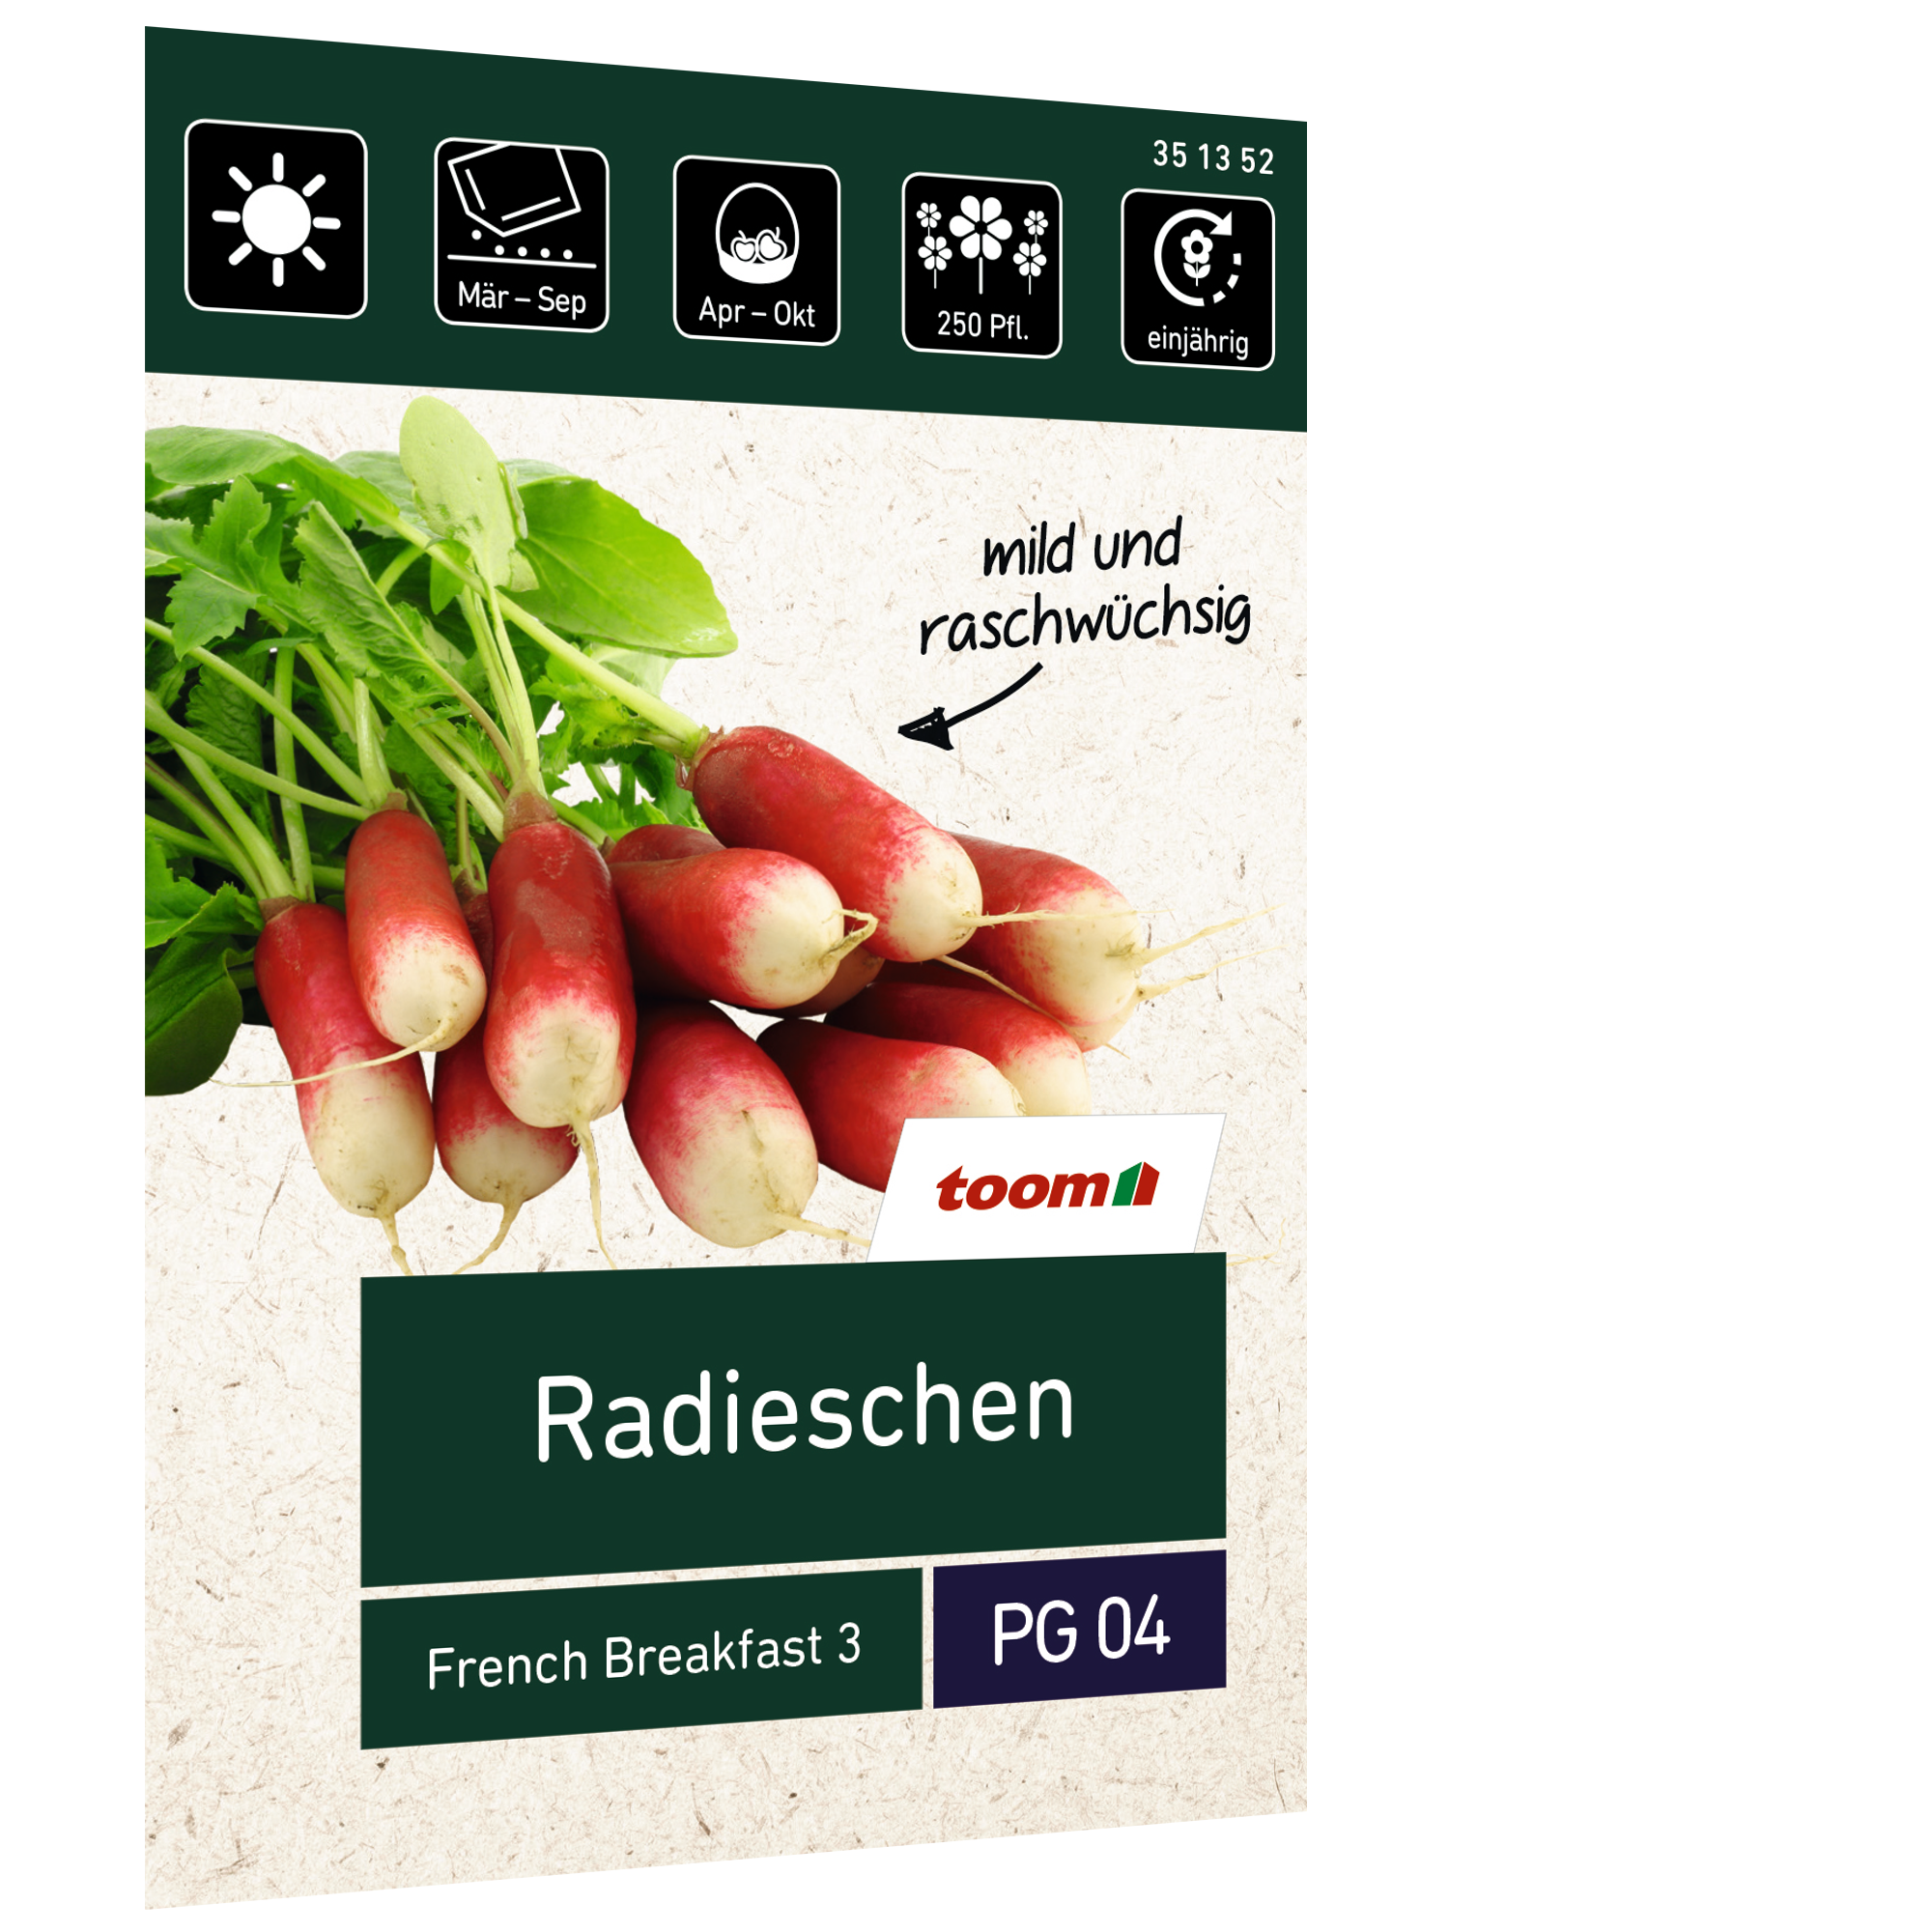 Radieschen 'French Breakfast 3' + product picture